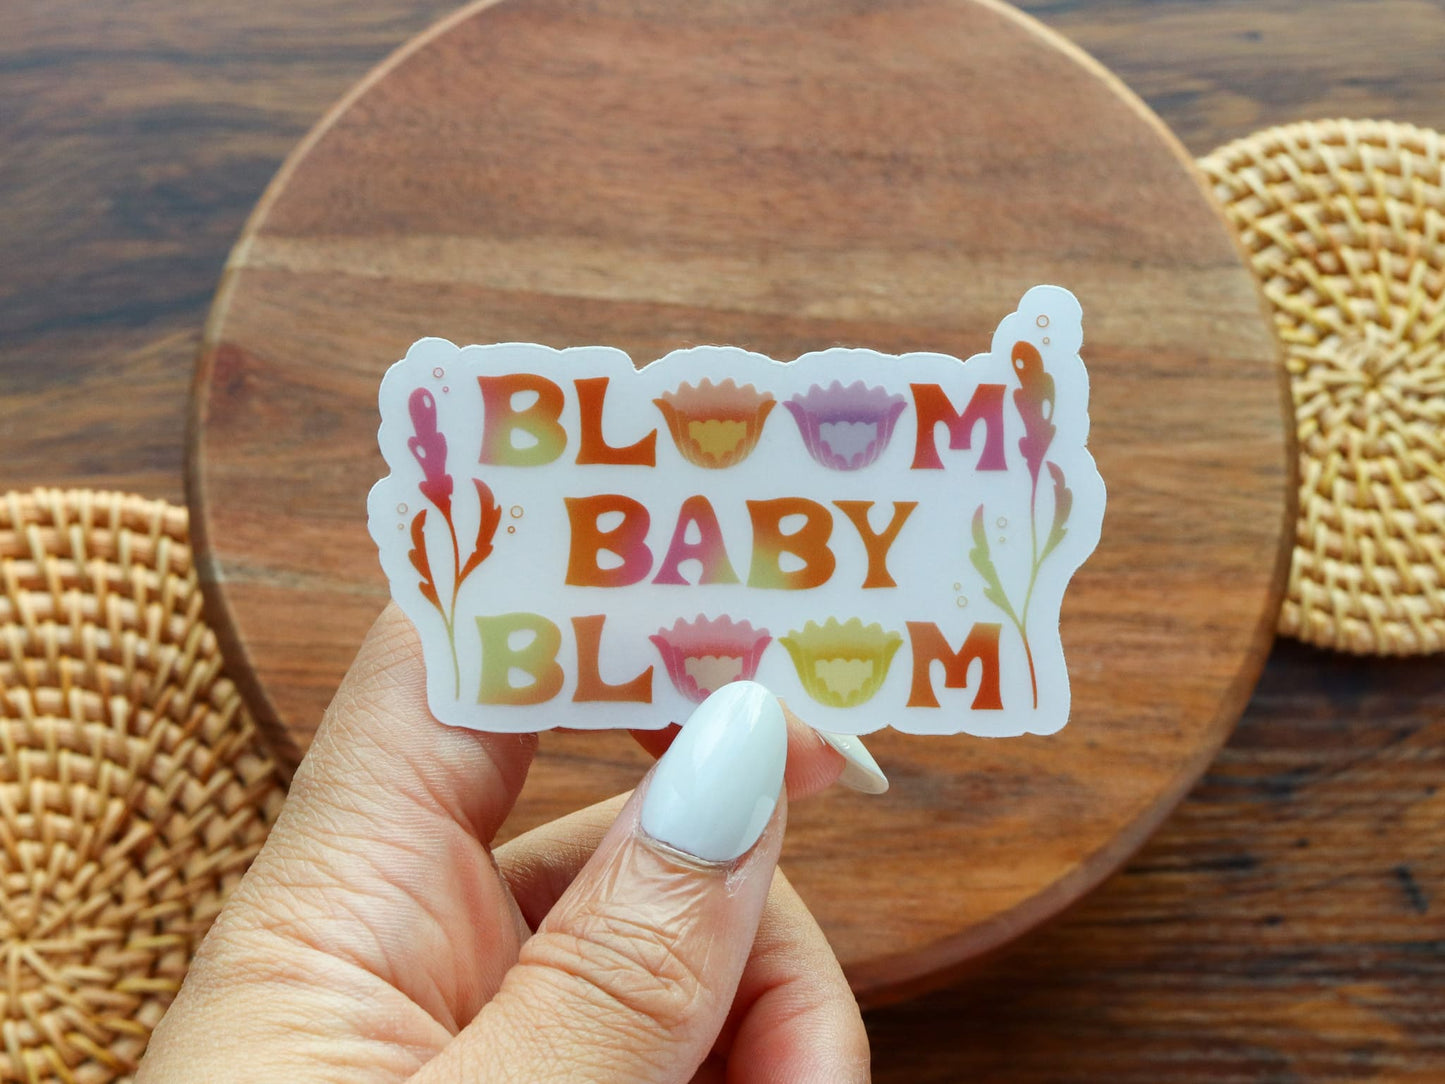 Bloom Baby Bloom clear sticker